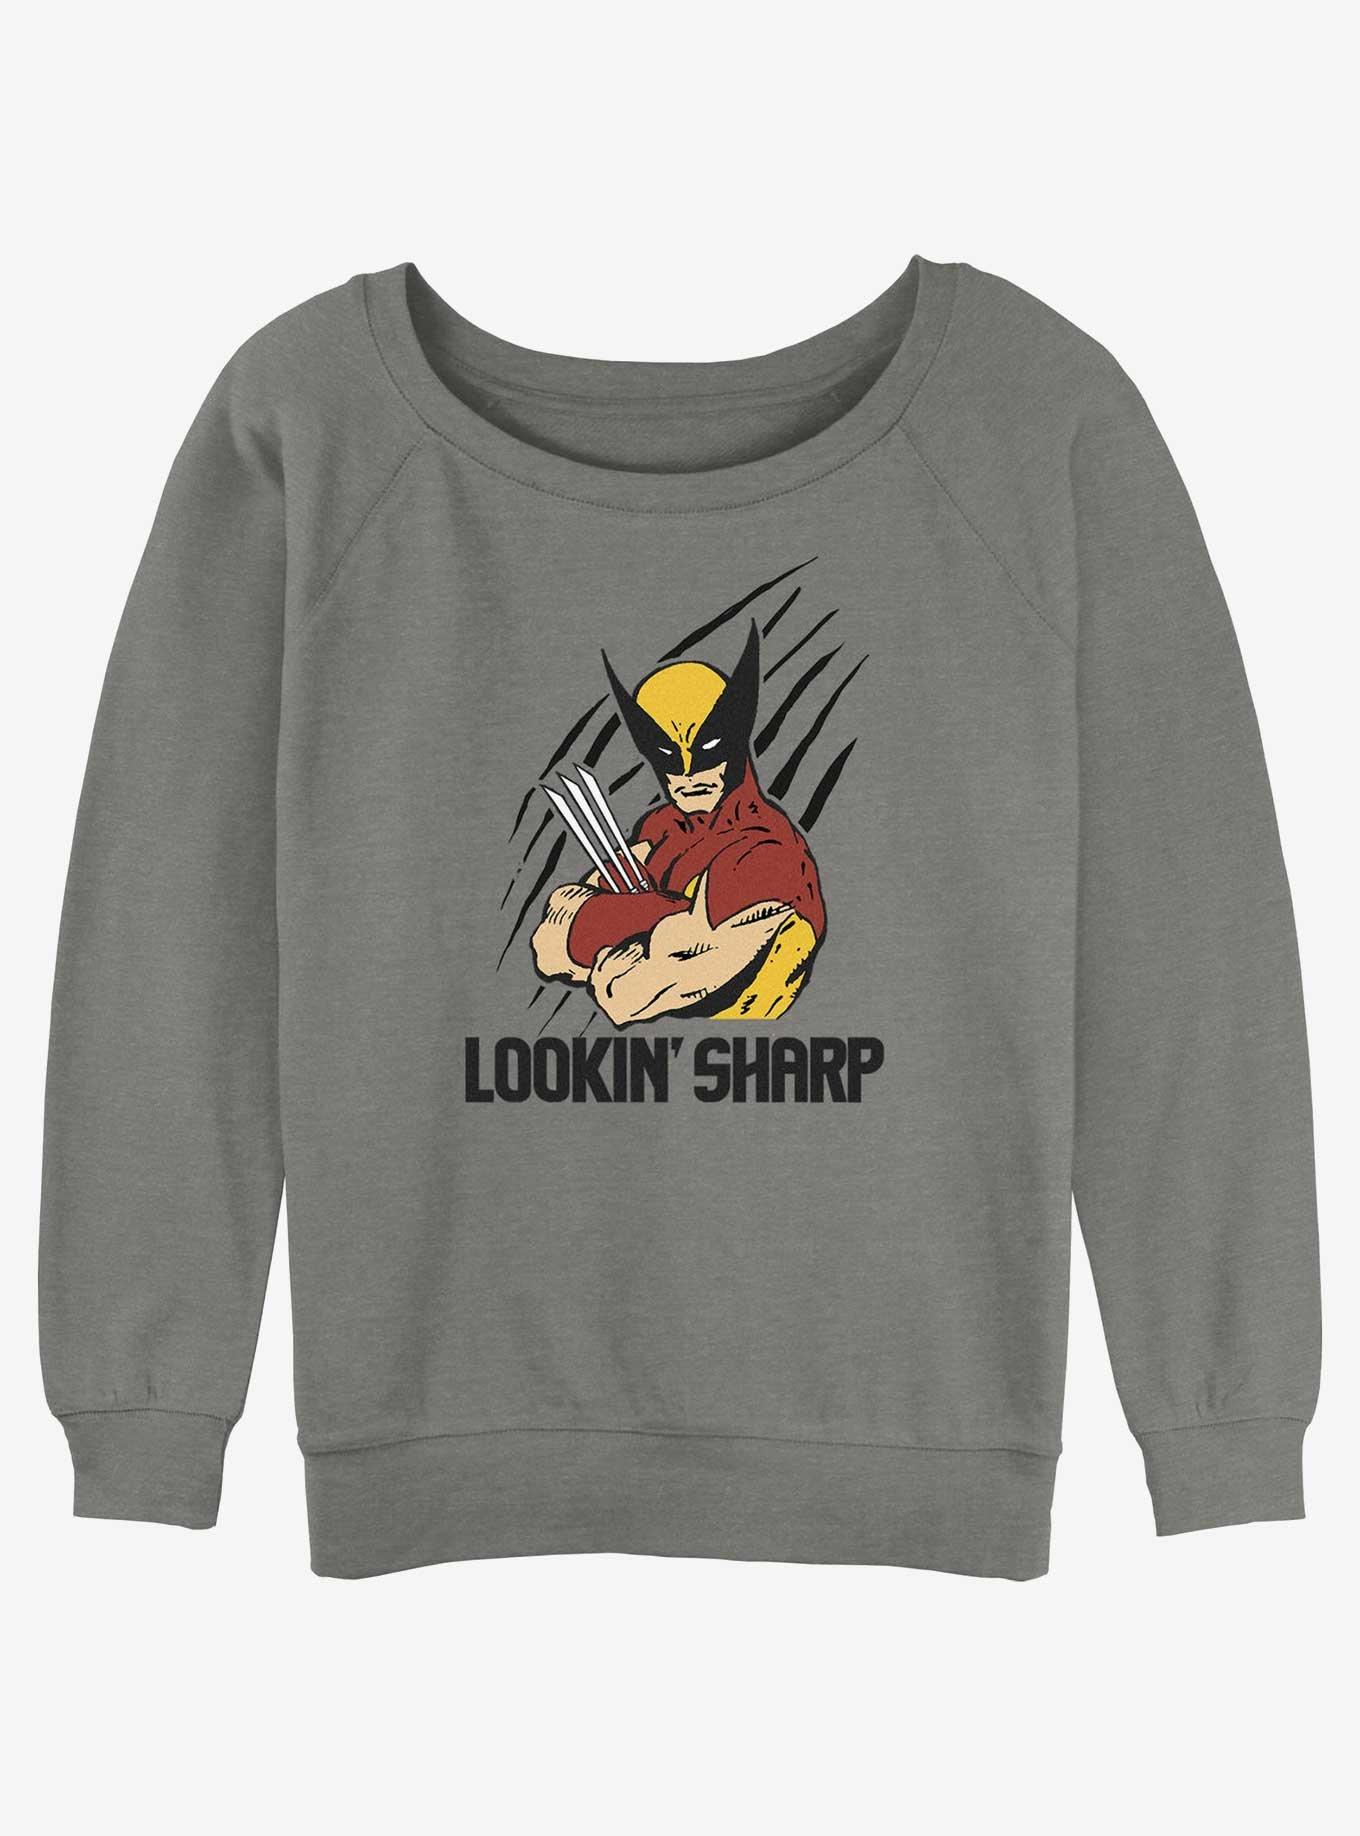 Wolverine Lookin' Sharp Girls Slouchy Sweatshirt